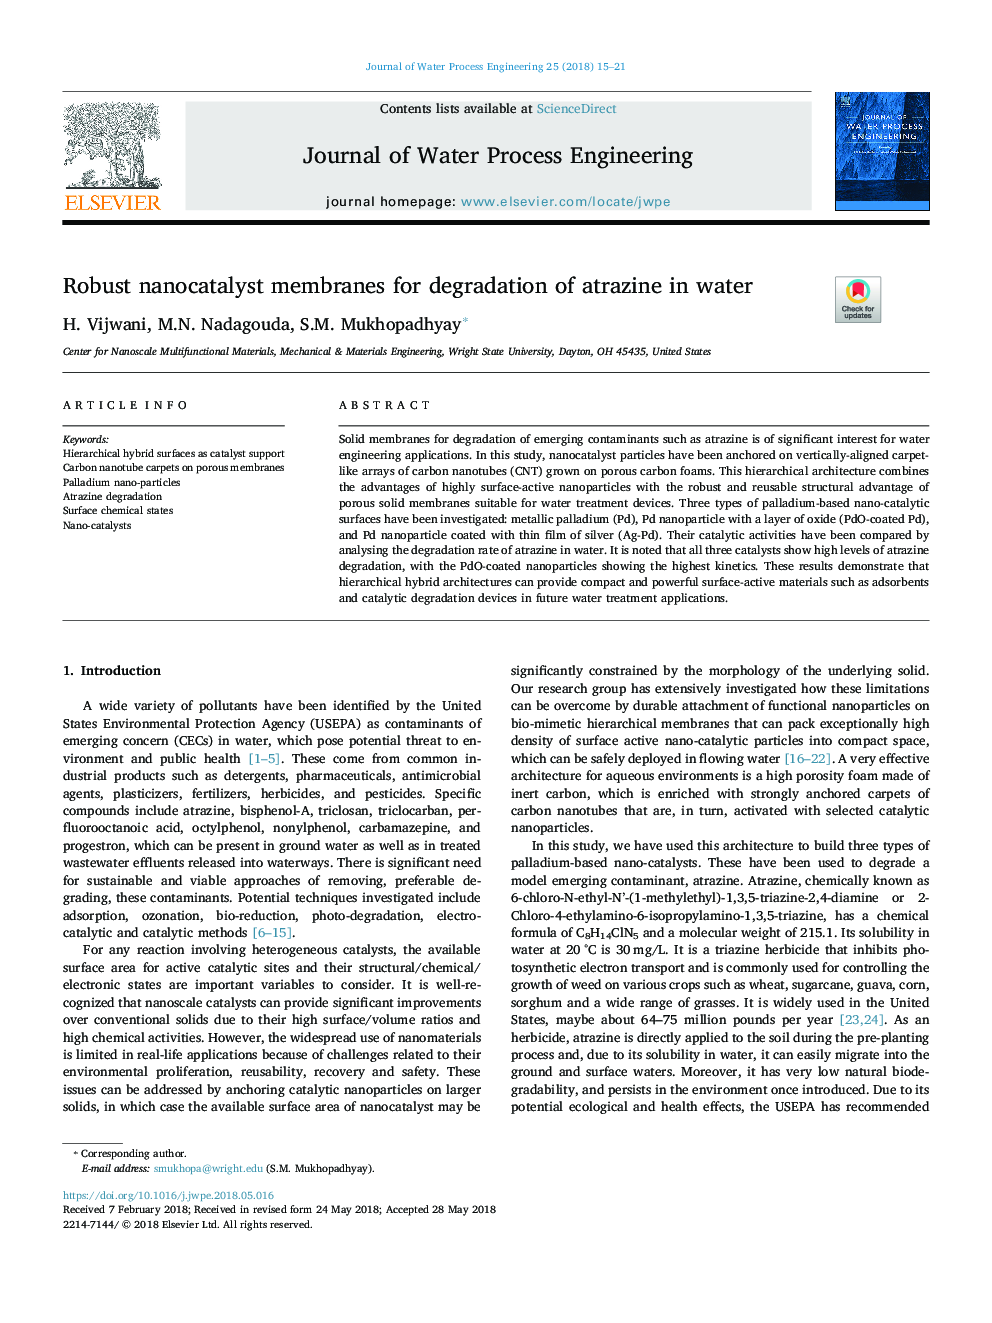 Robust nanocatalyst membranes for degradation of atrazine in water